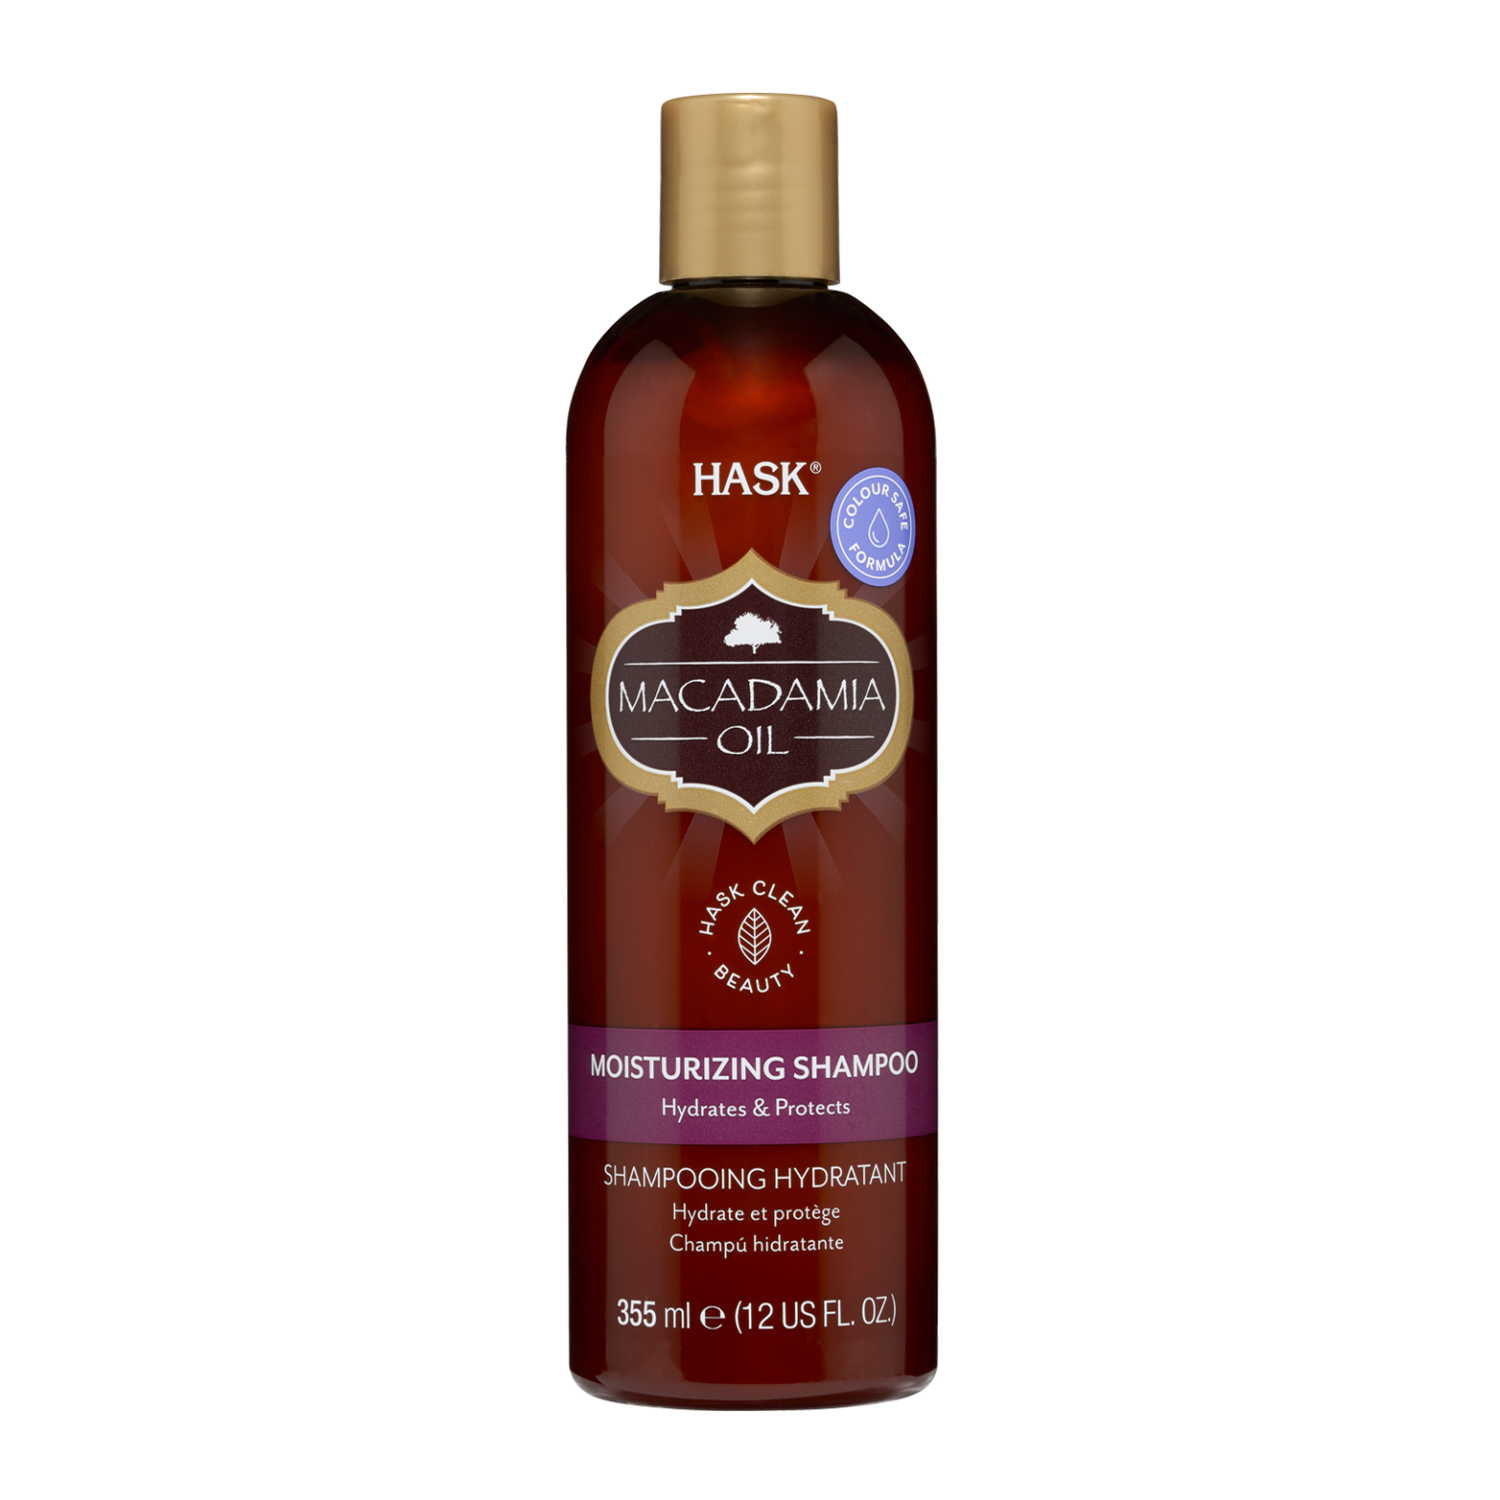 HASK Macadamia Oil Moisturizing Shampoo